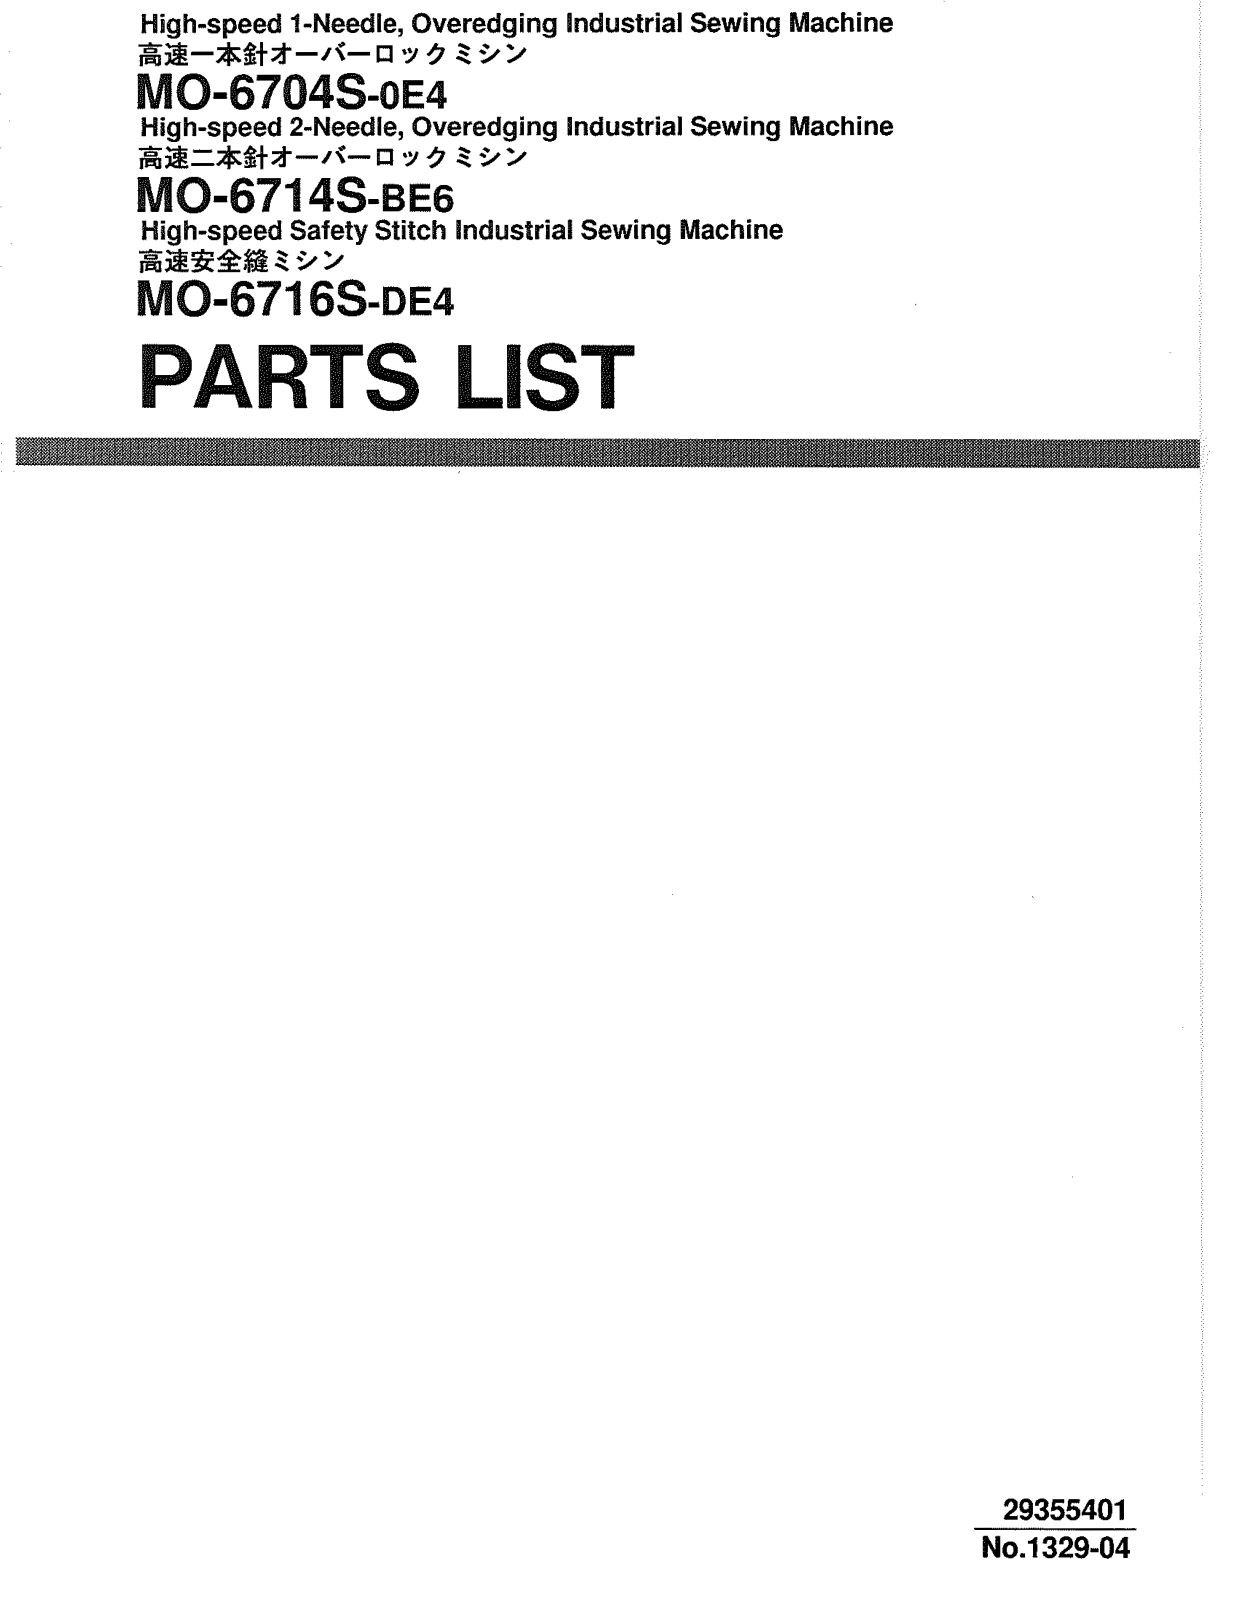 Juki MO-6704S-OE4, MO-6714S-BE6, MO-6716S-DE4 Parts List